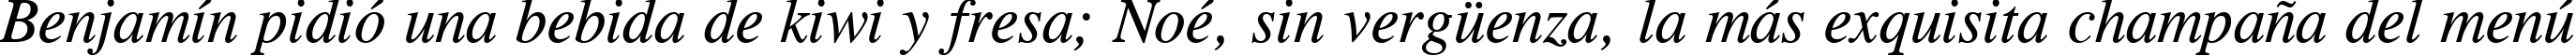 Пример написания шрифтом CG Times Italic текста на испанском